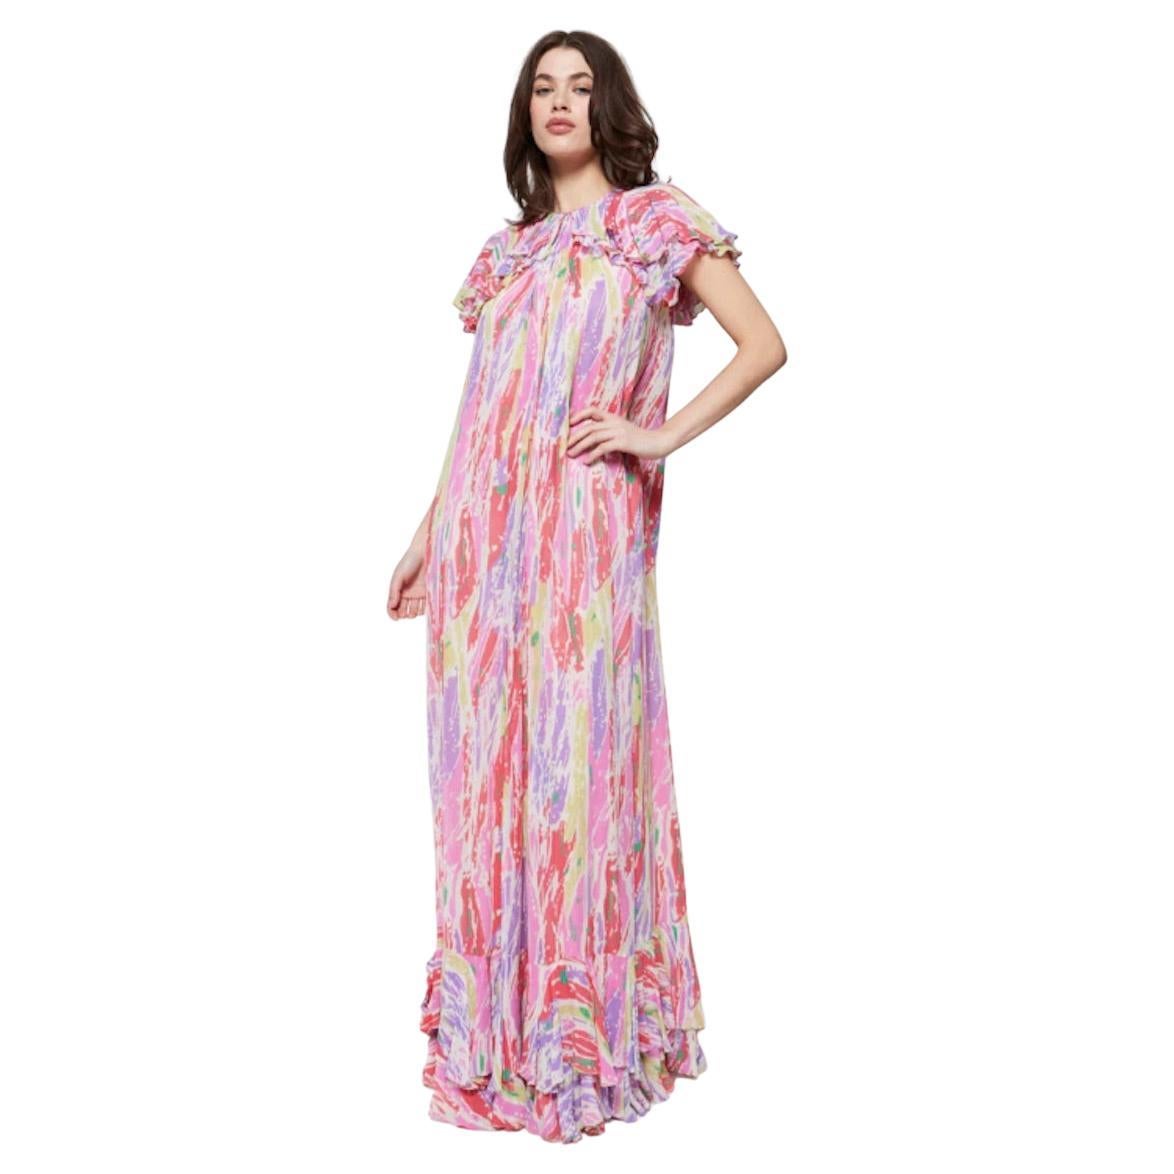 Jean Varon 1970er Jahre Mehrfarbiges Kleid